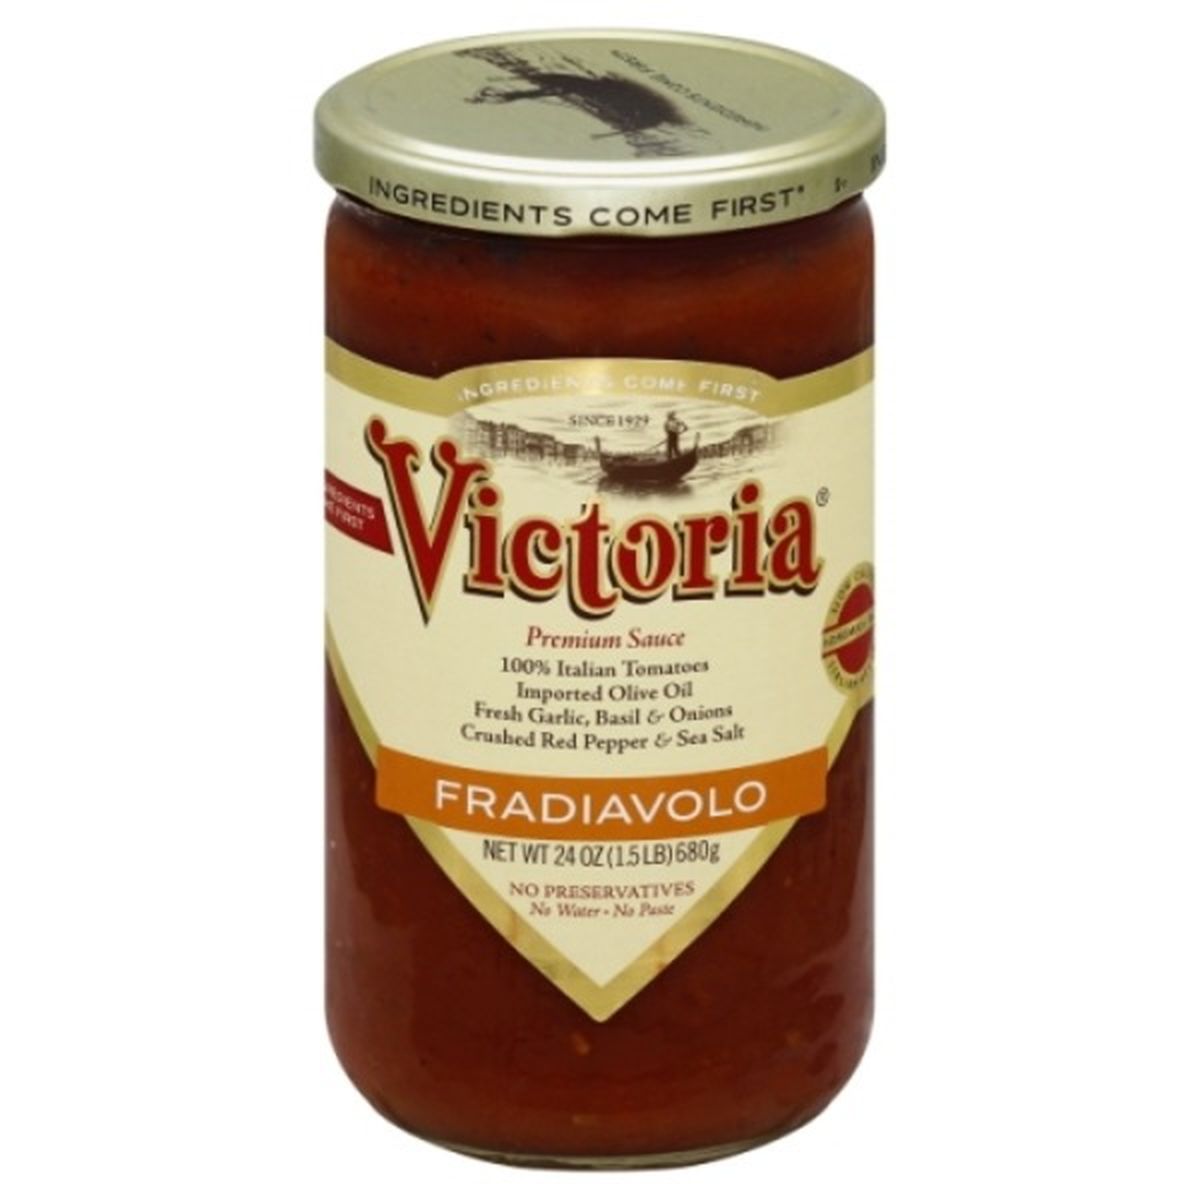 Calories in Victoria Fradiavolo Sauce